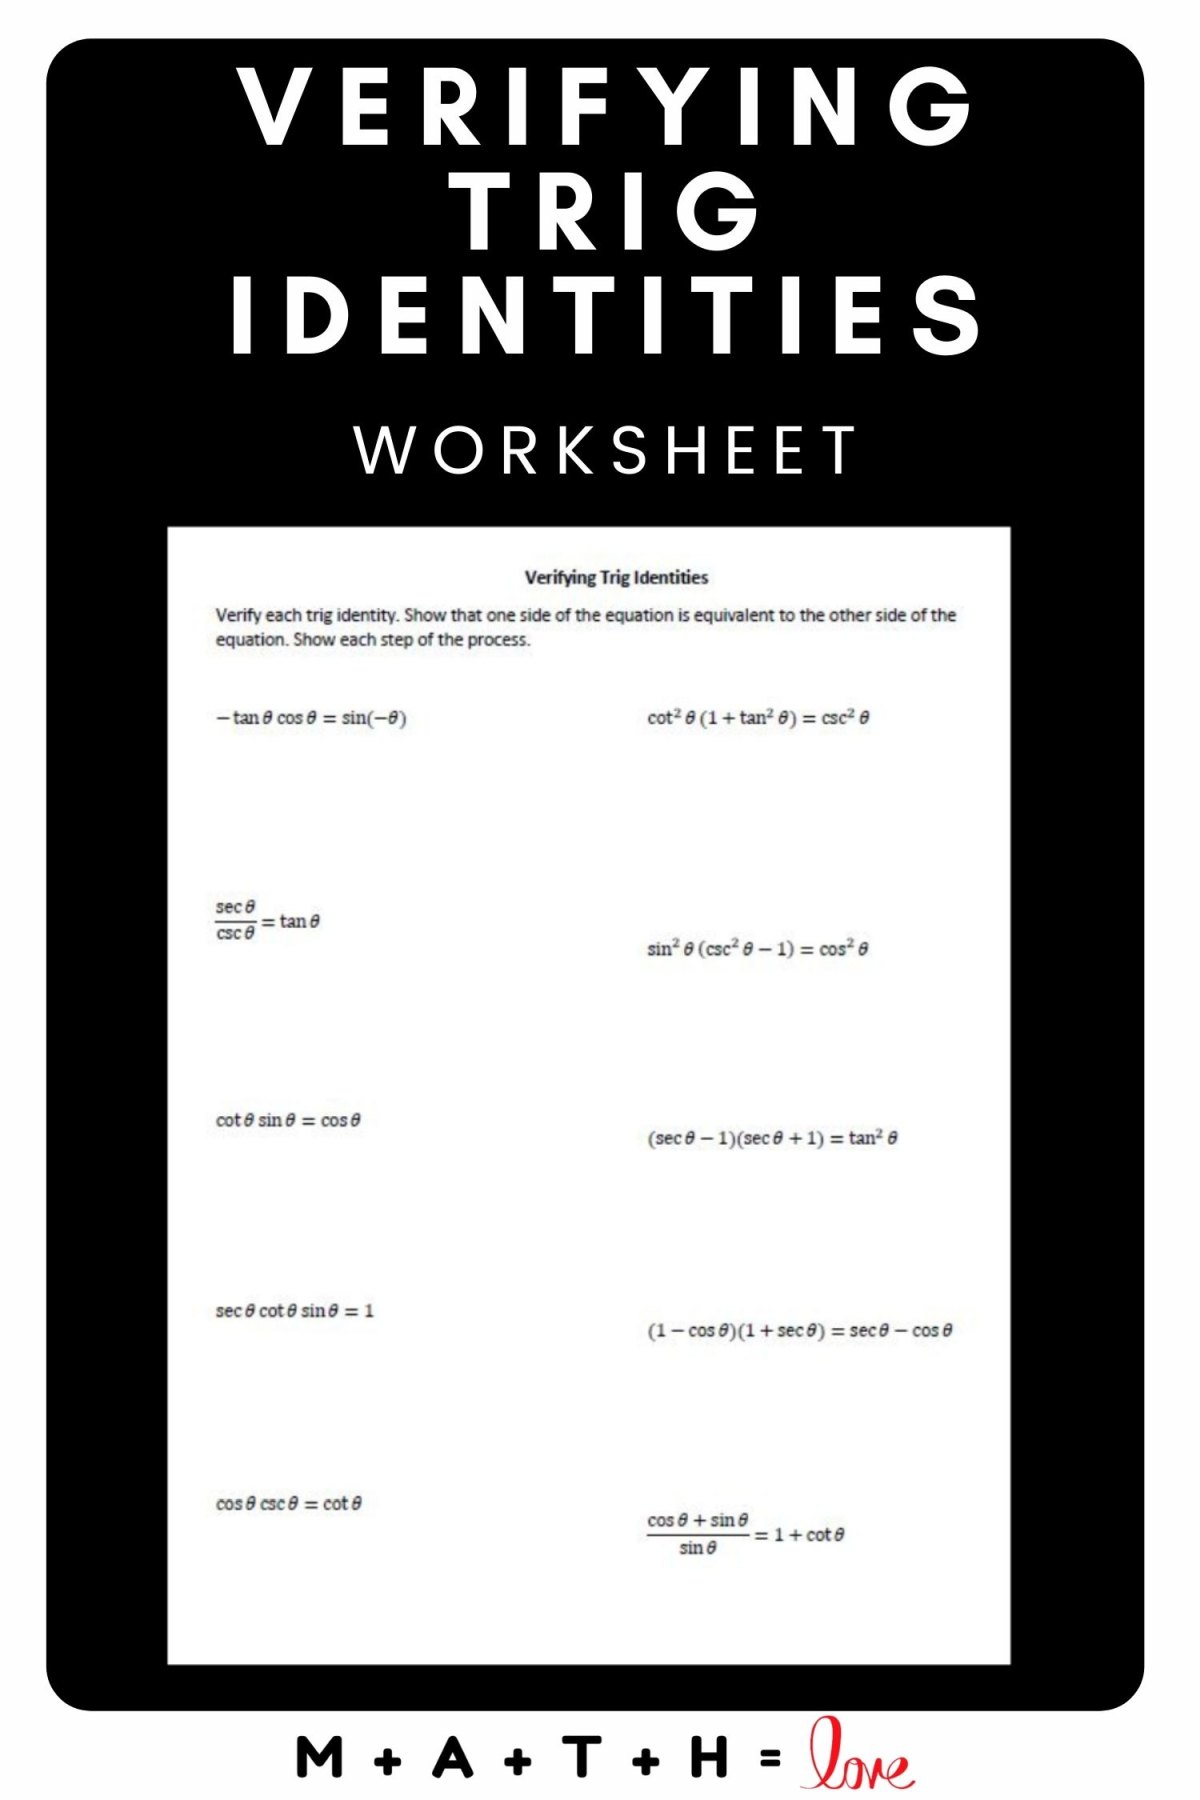 Verifying Trig Identities Worksheet  Math = Love With Regard To Verify Trig Identities Worksheet